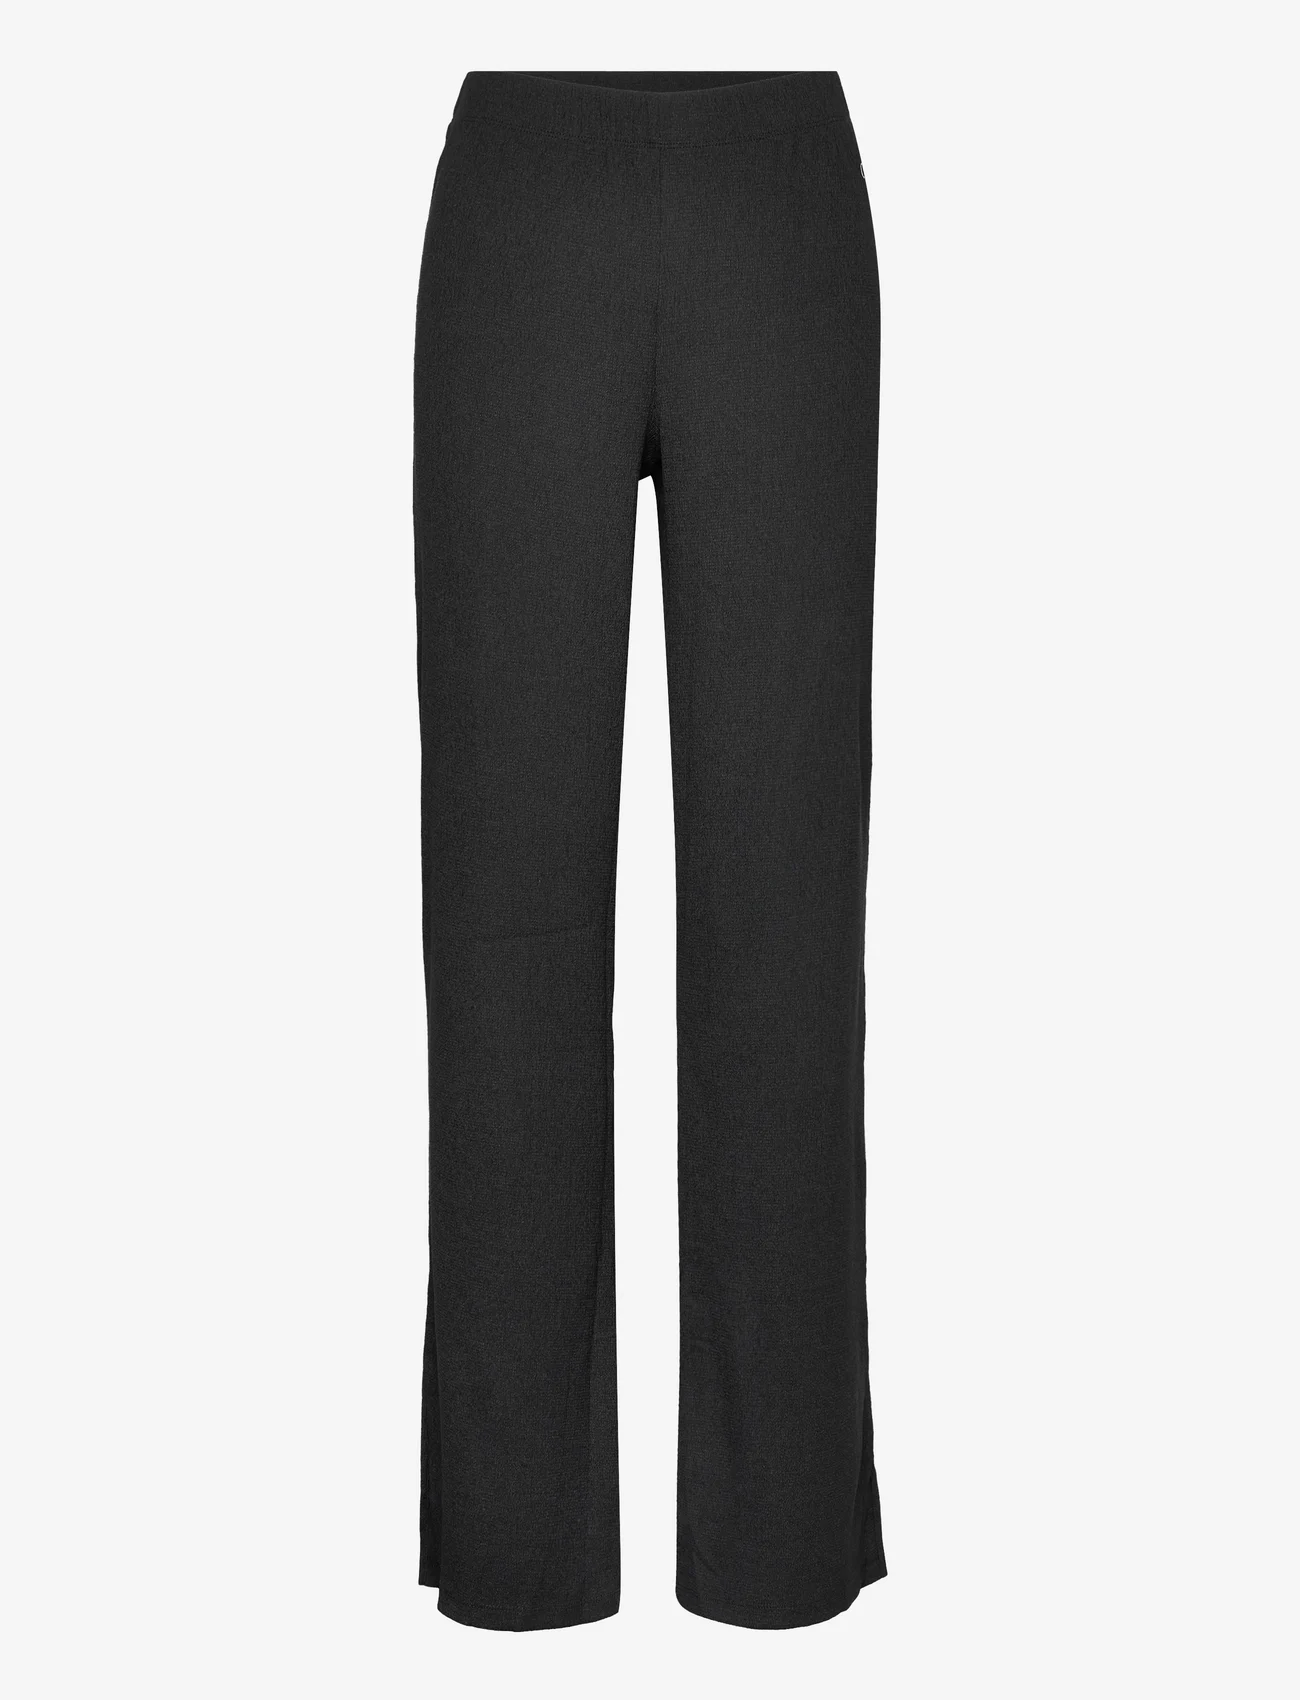 Calvin Klein Jeans - STRAIGHT KNIT PANTS - bukser - ck black - 0